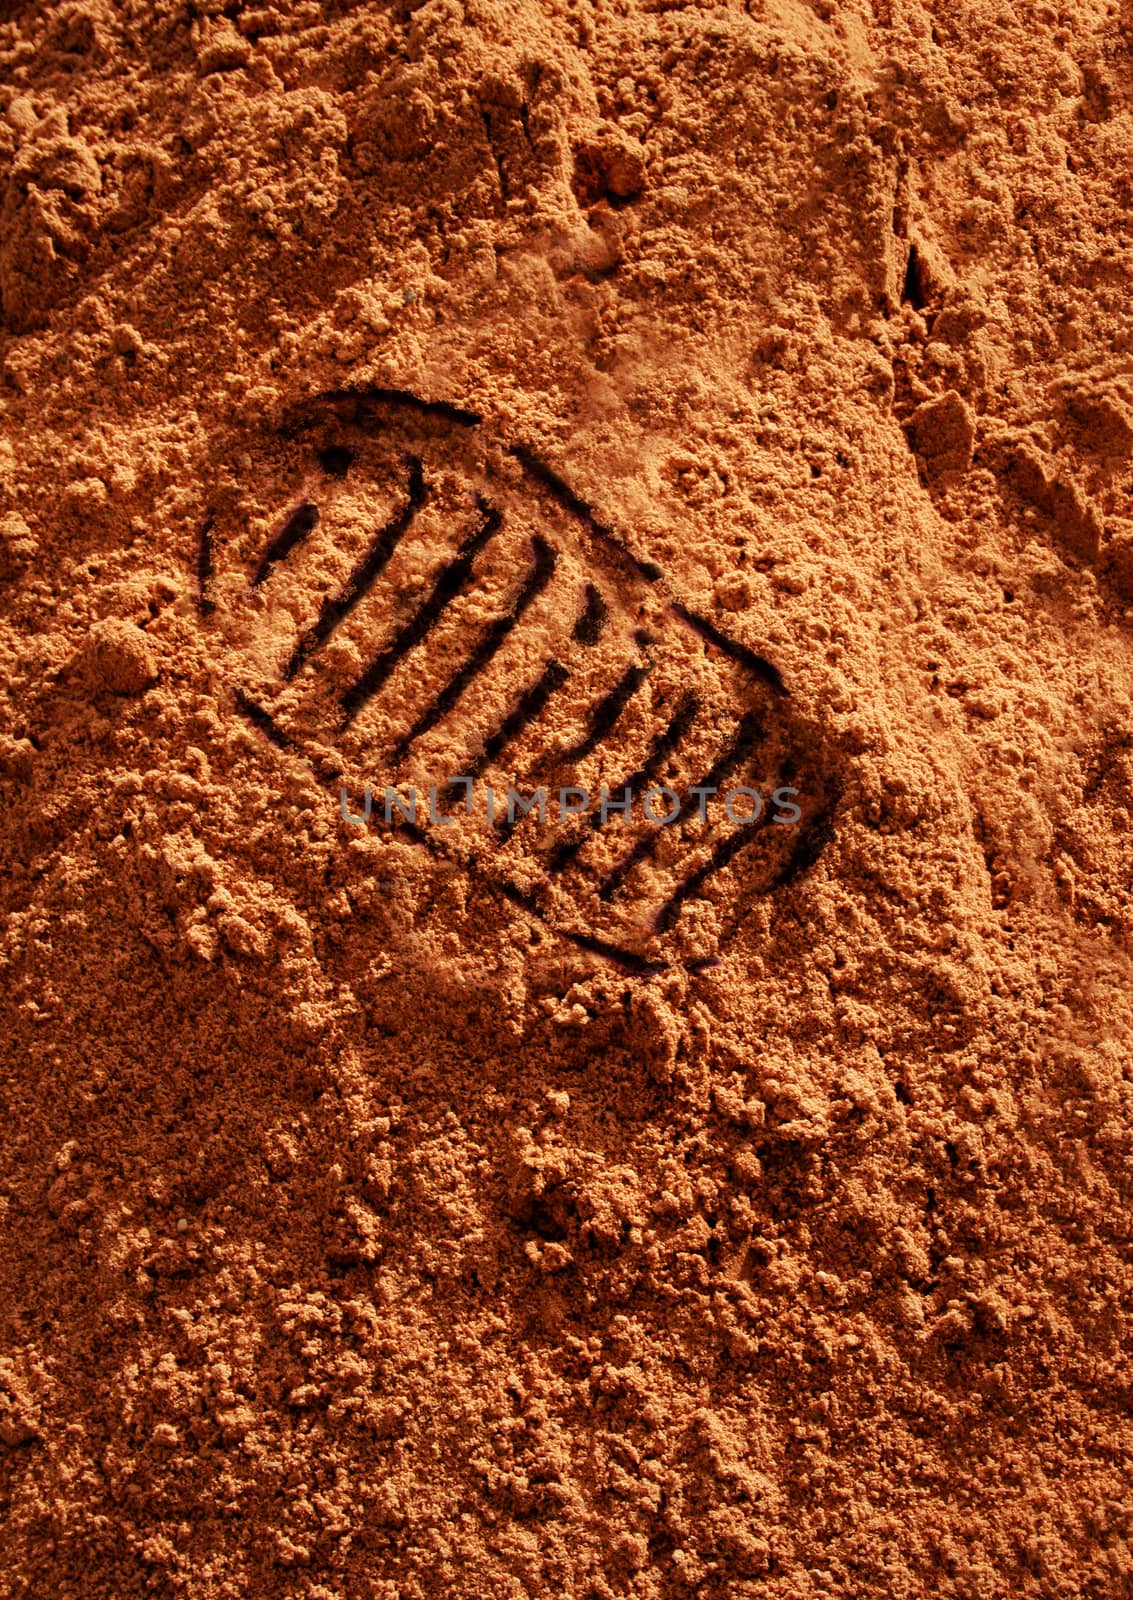 Astronaut footprint on red Martian sand by anterovium